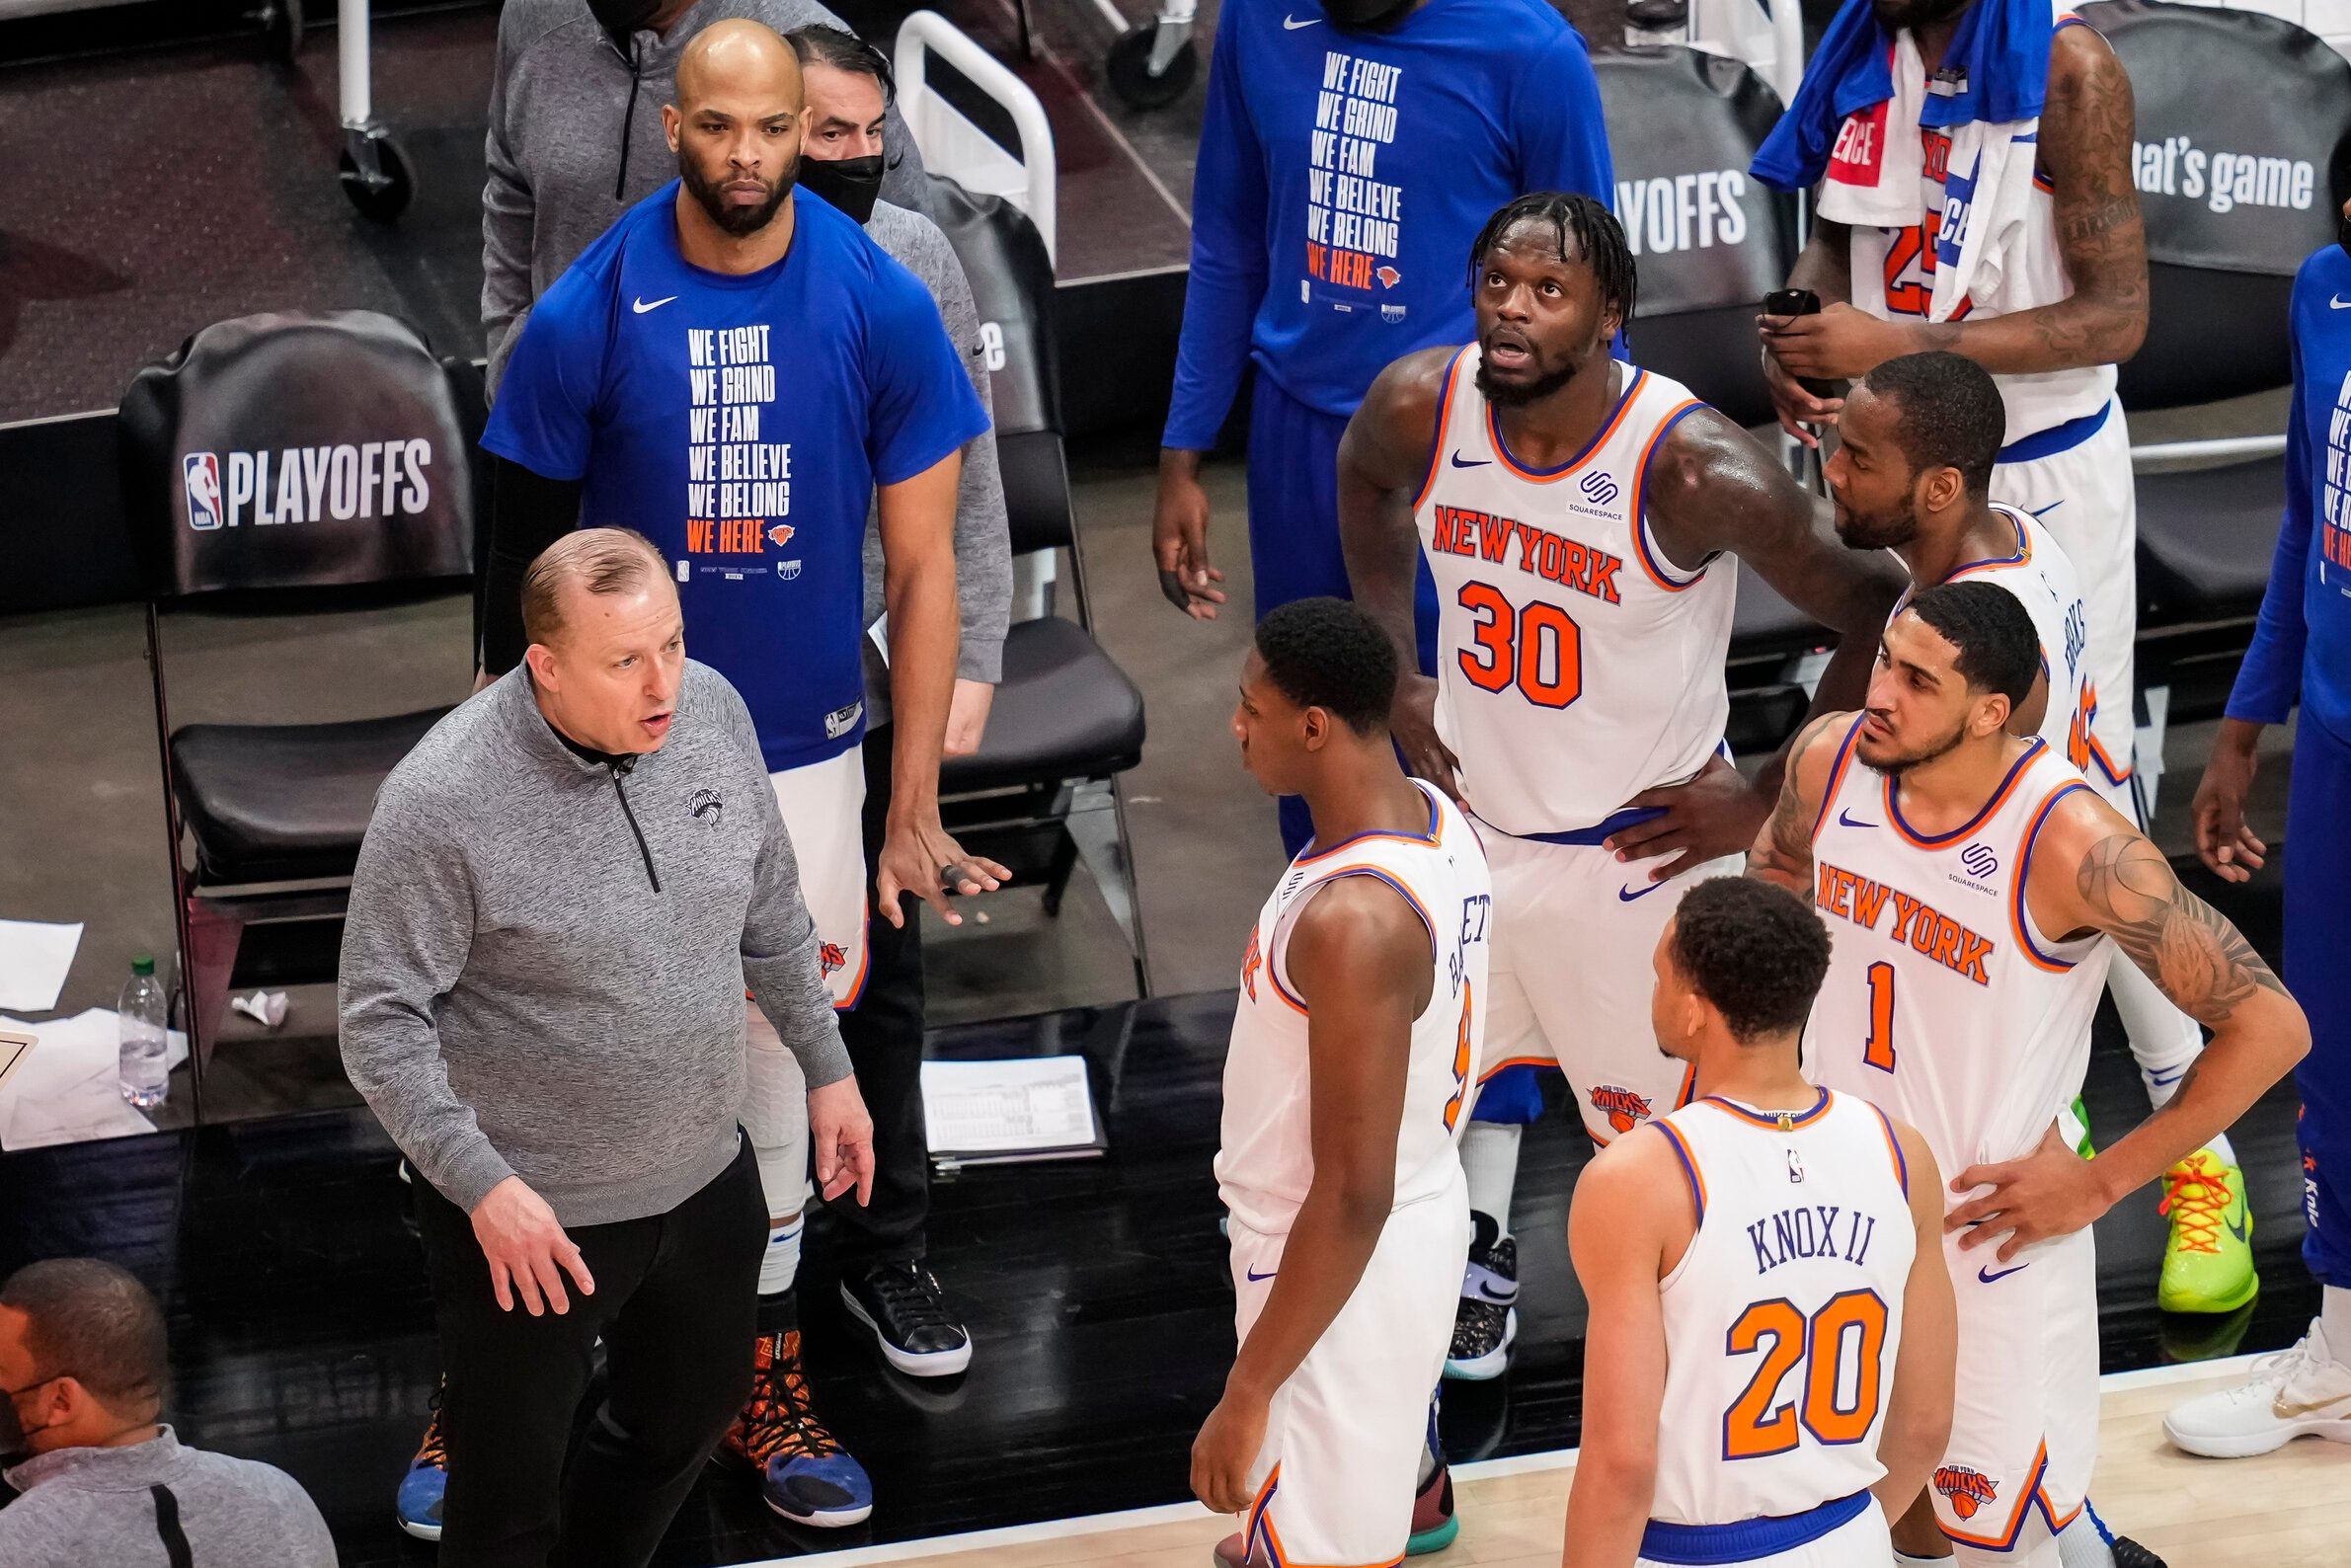 Knicks’ Tom Thibodeau named NBA Coach of the Year